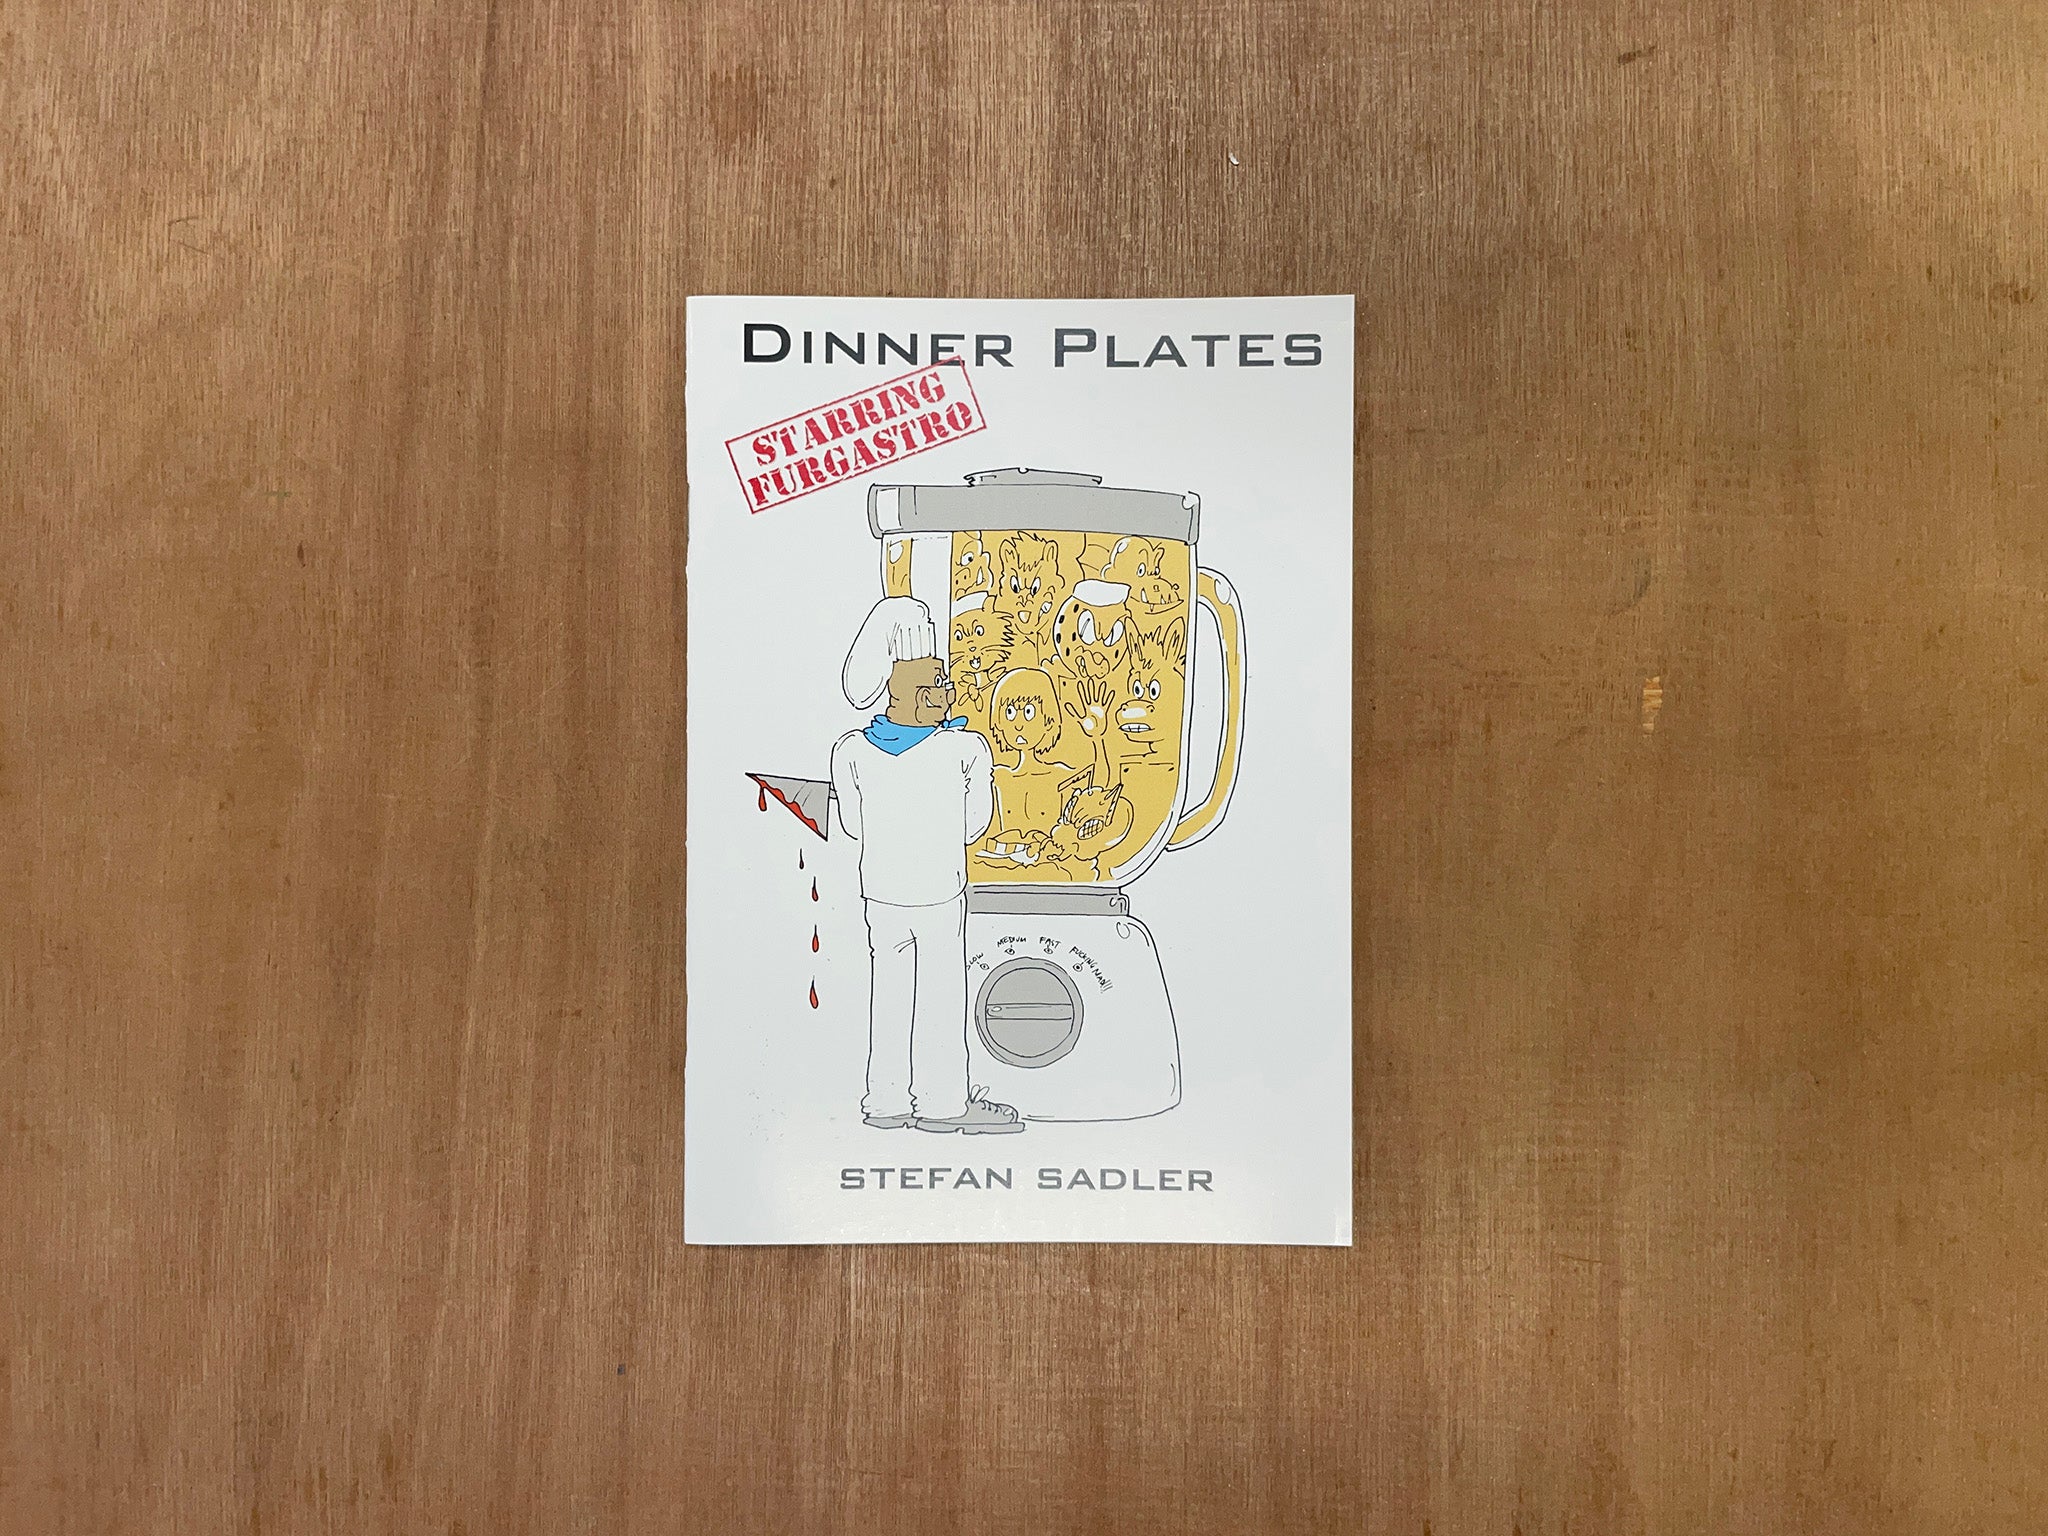 DINNER PLATES by Stef Sadler